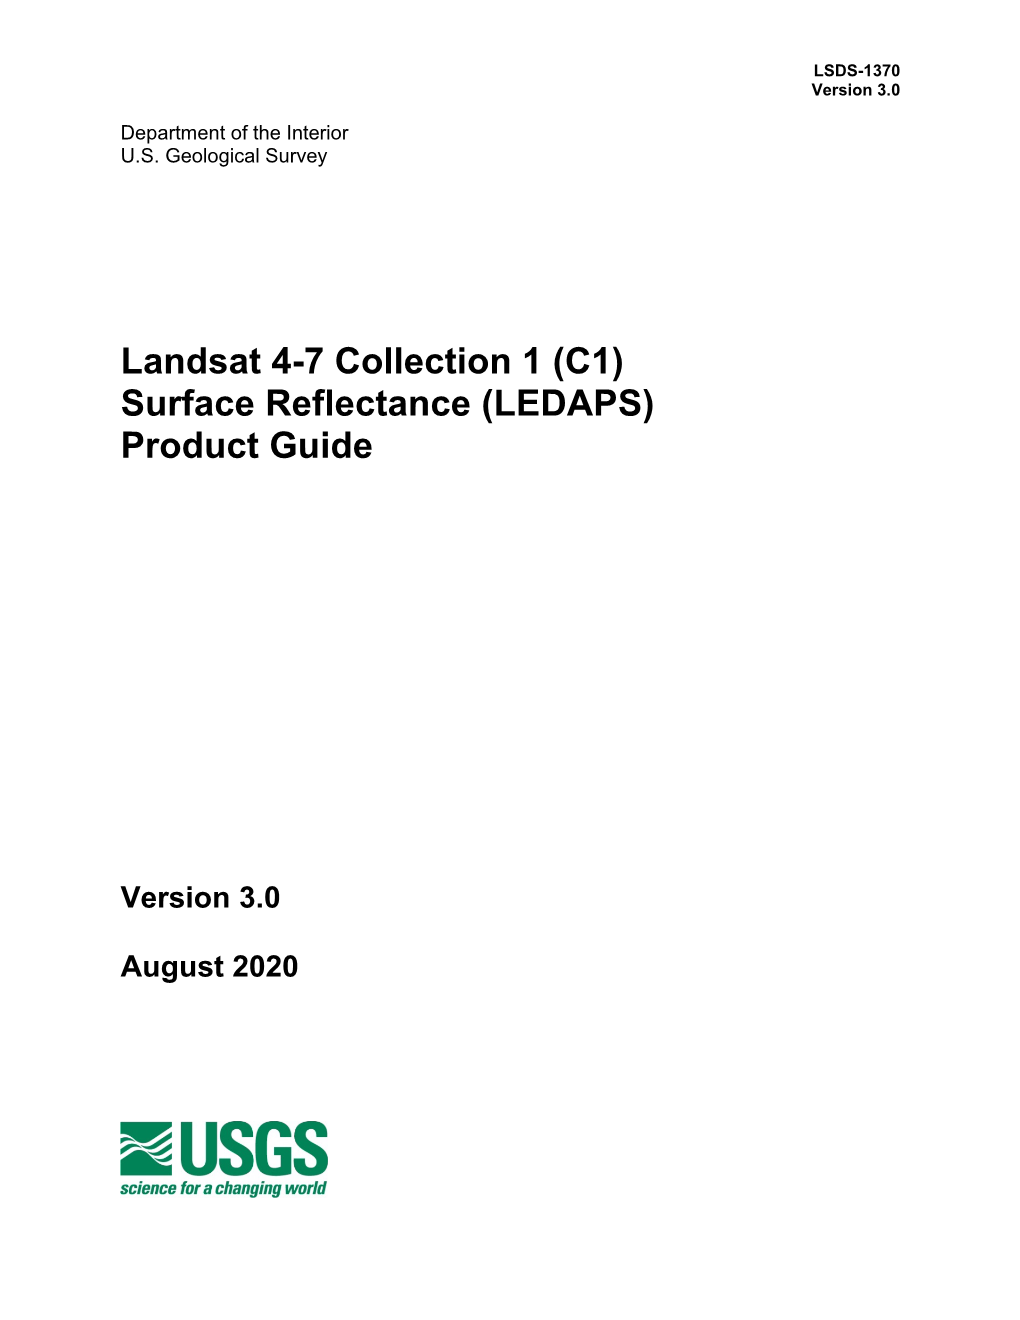 Landsat 4-7 Surface Reflectance (LEDAPS)